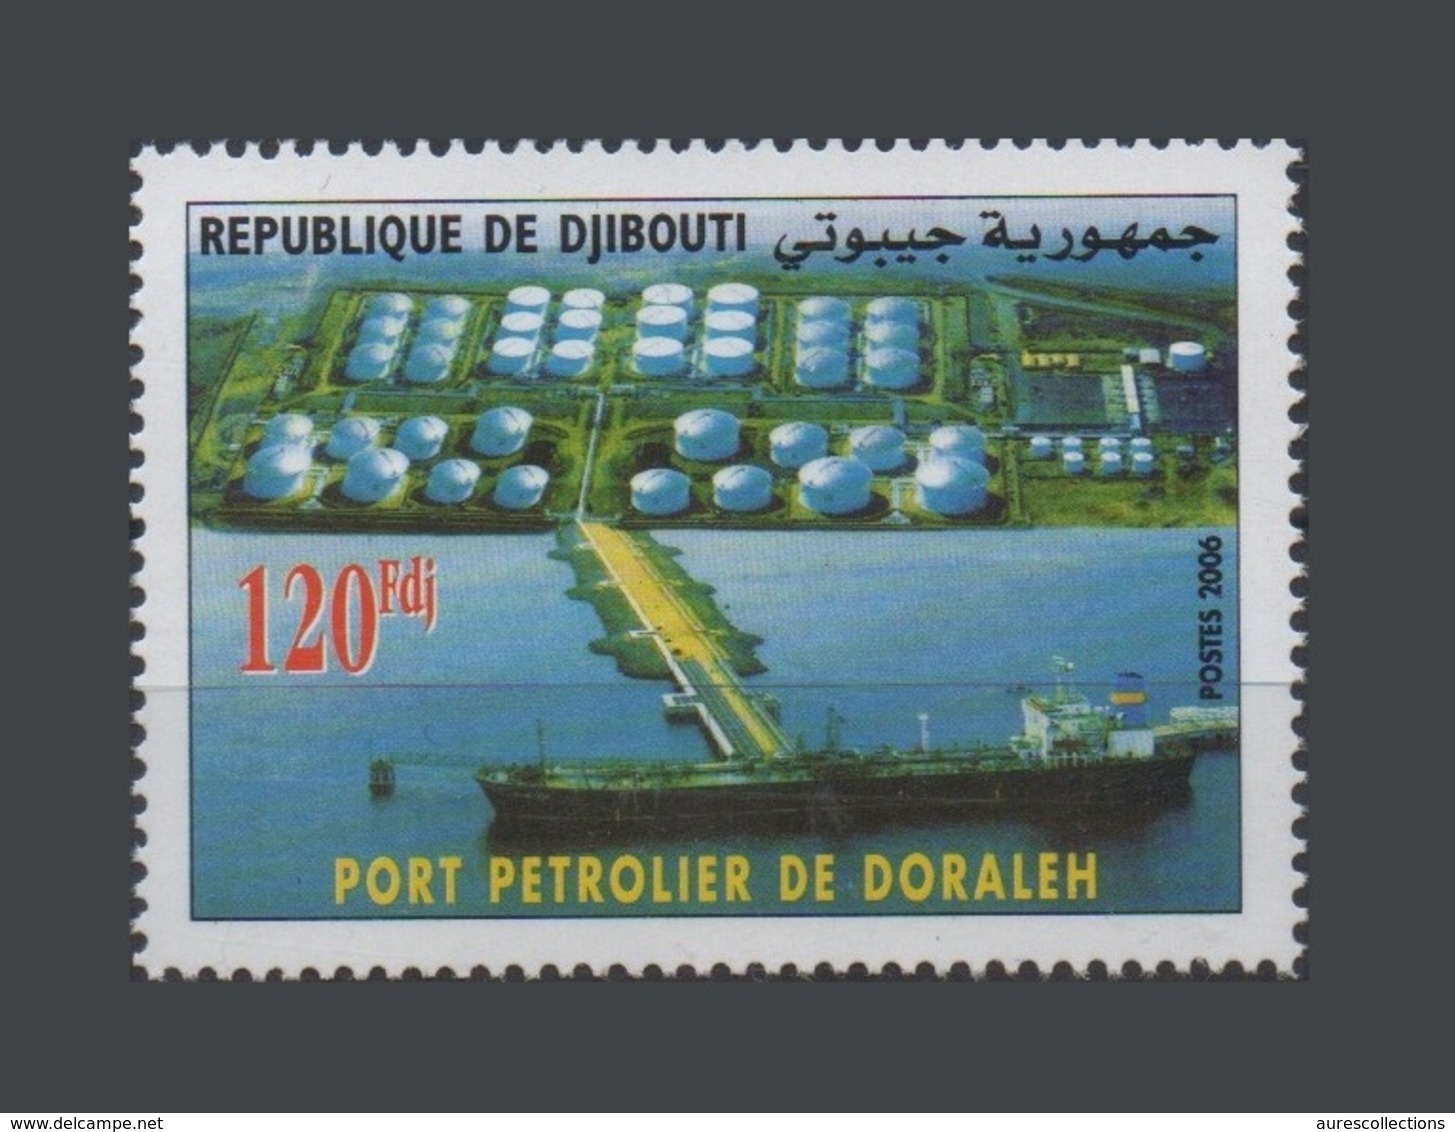 ¤NEW YEAR SALE¤ DJIBOUTI 2006 DORALEH PORT BOAT BATEAU SHIP PETROLIER PETROLEUM HARBOR Michel Mi 808 MNH ** RARE - Erdöl